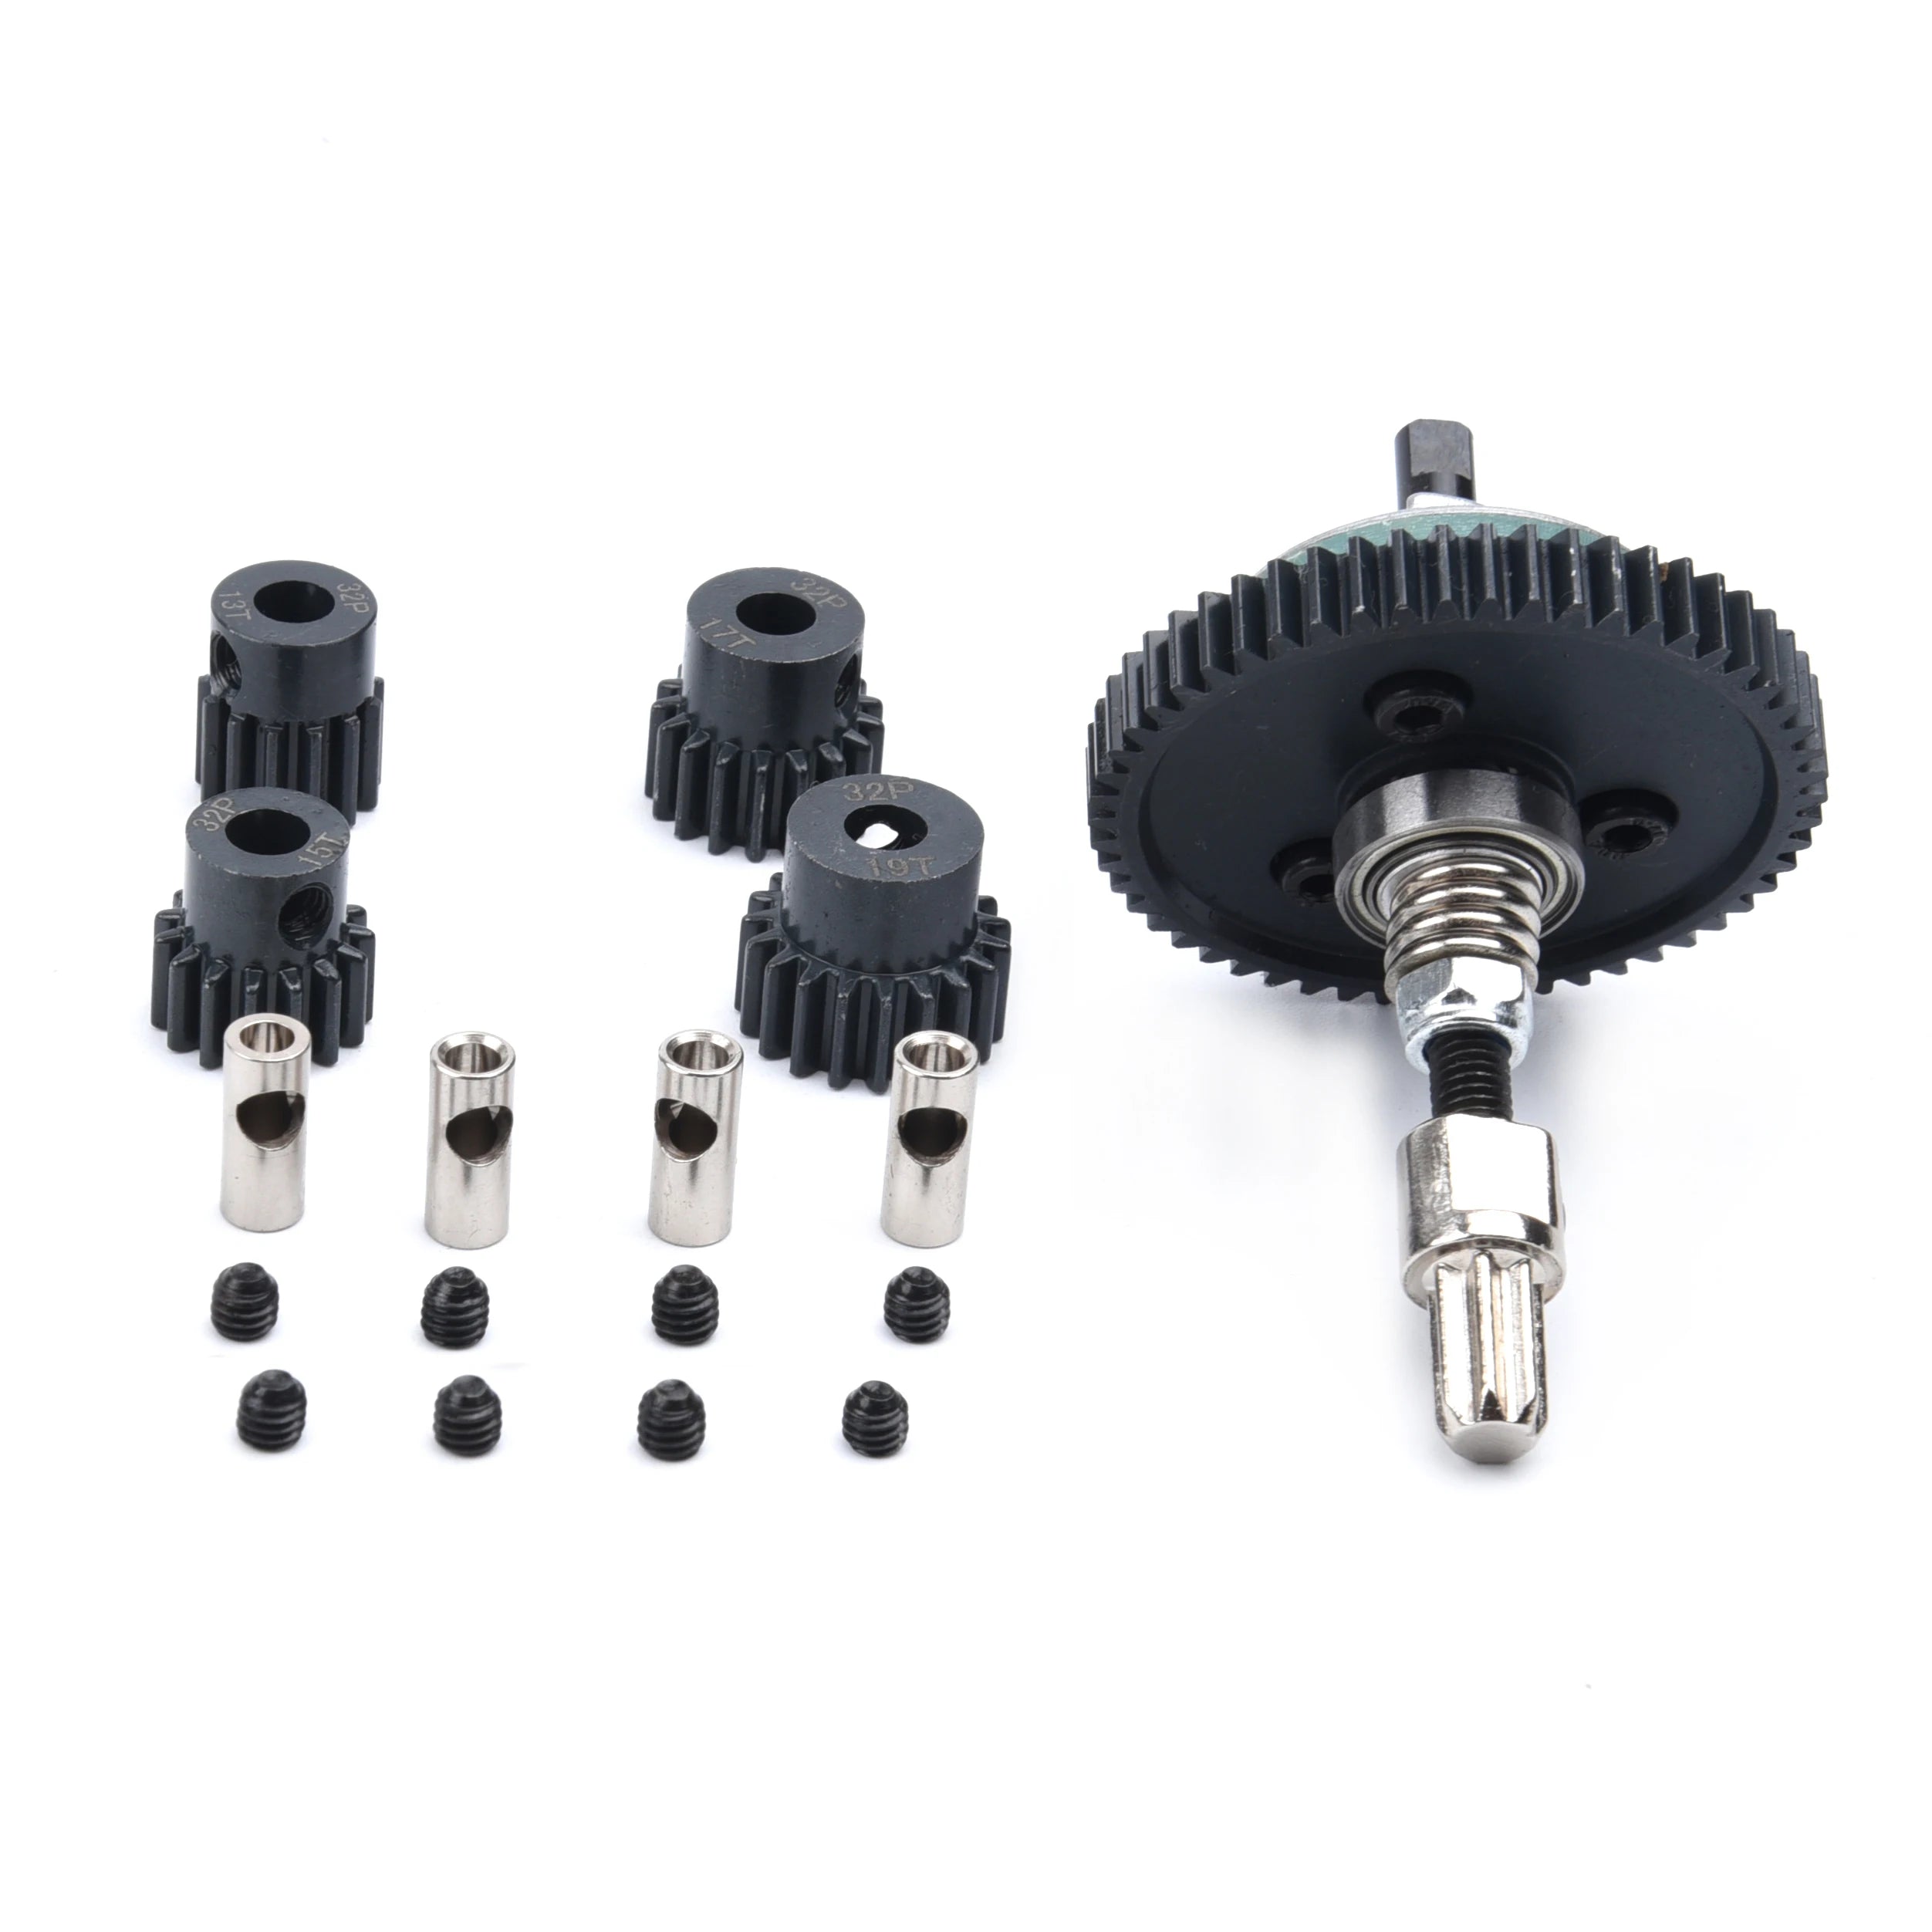 54T Spur Gear, RC Parts & Accs : Motor Components Quantity :